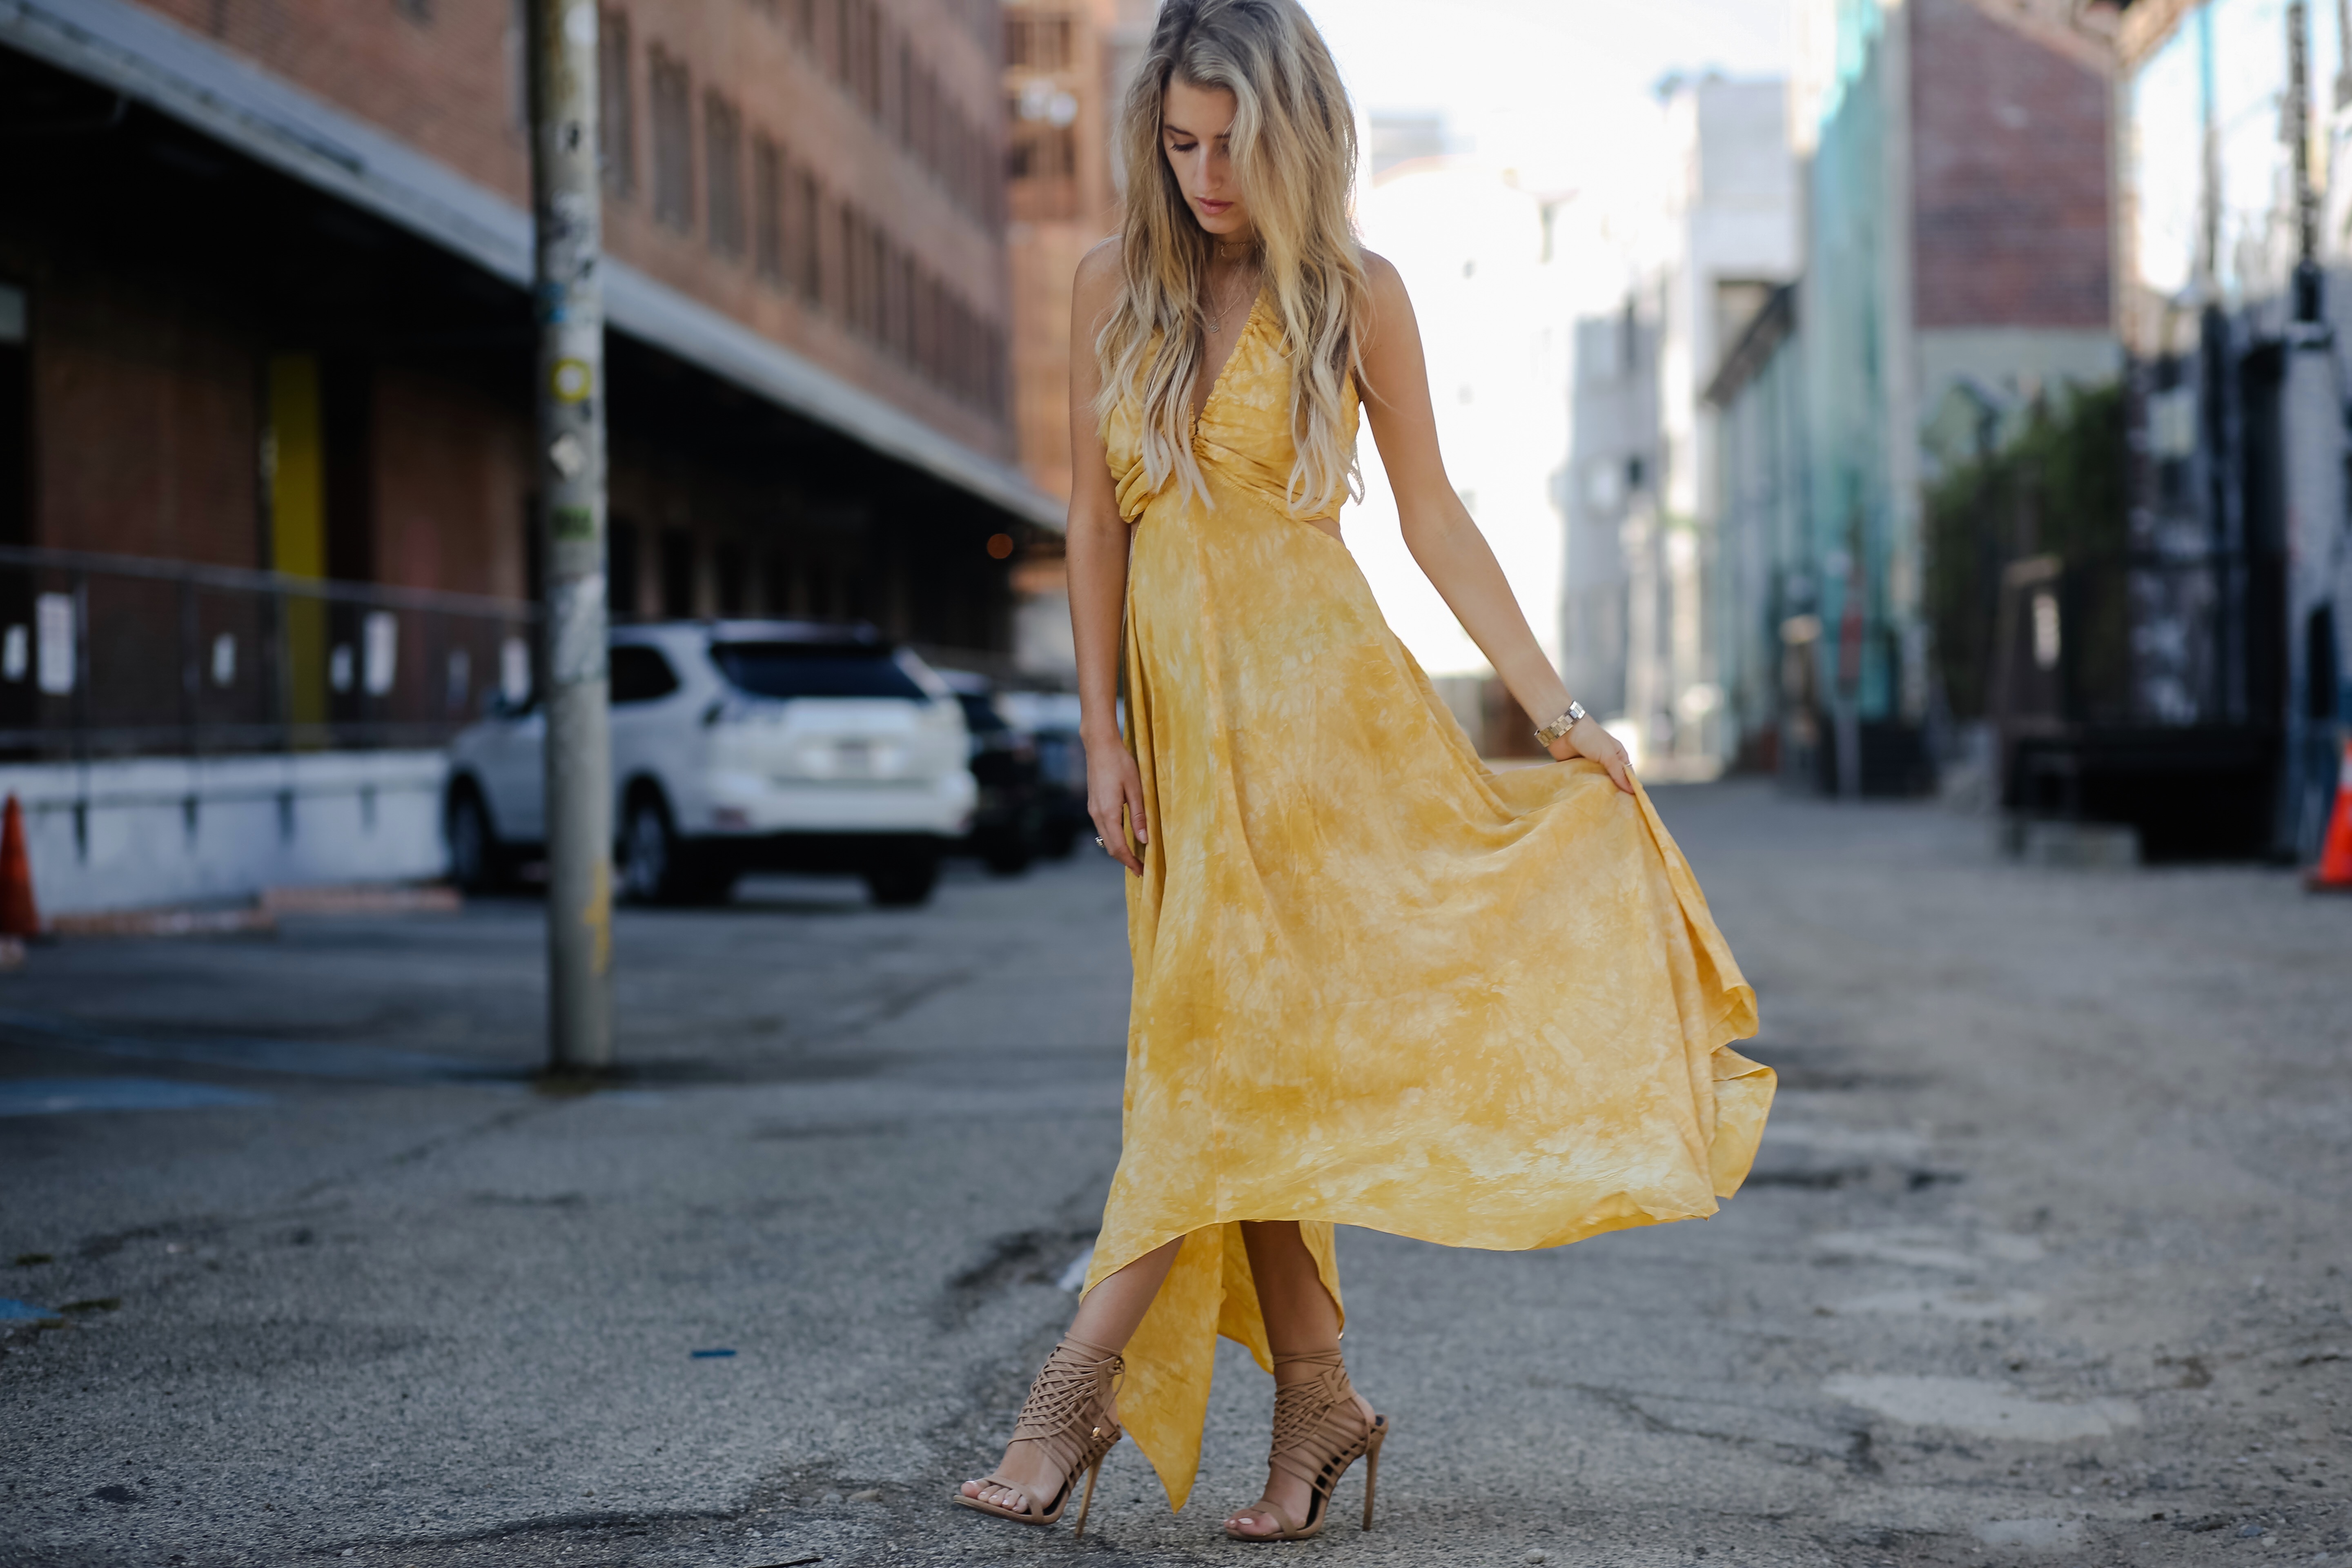 Yellow maxi dress